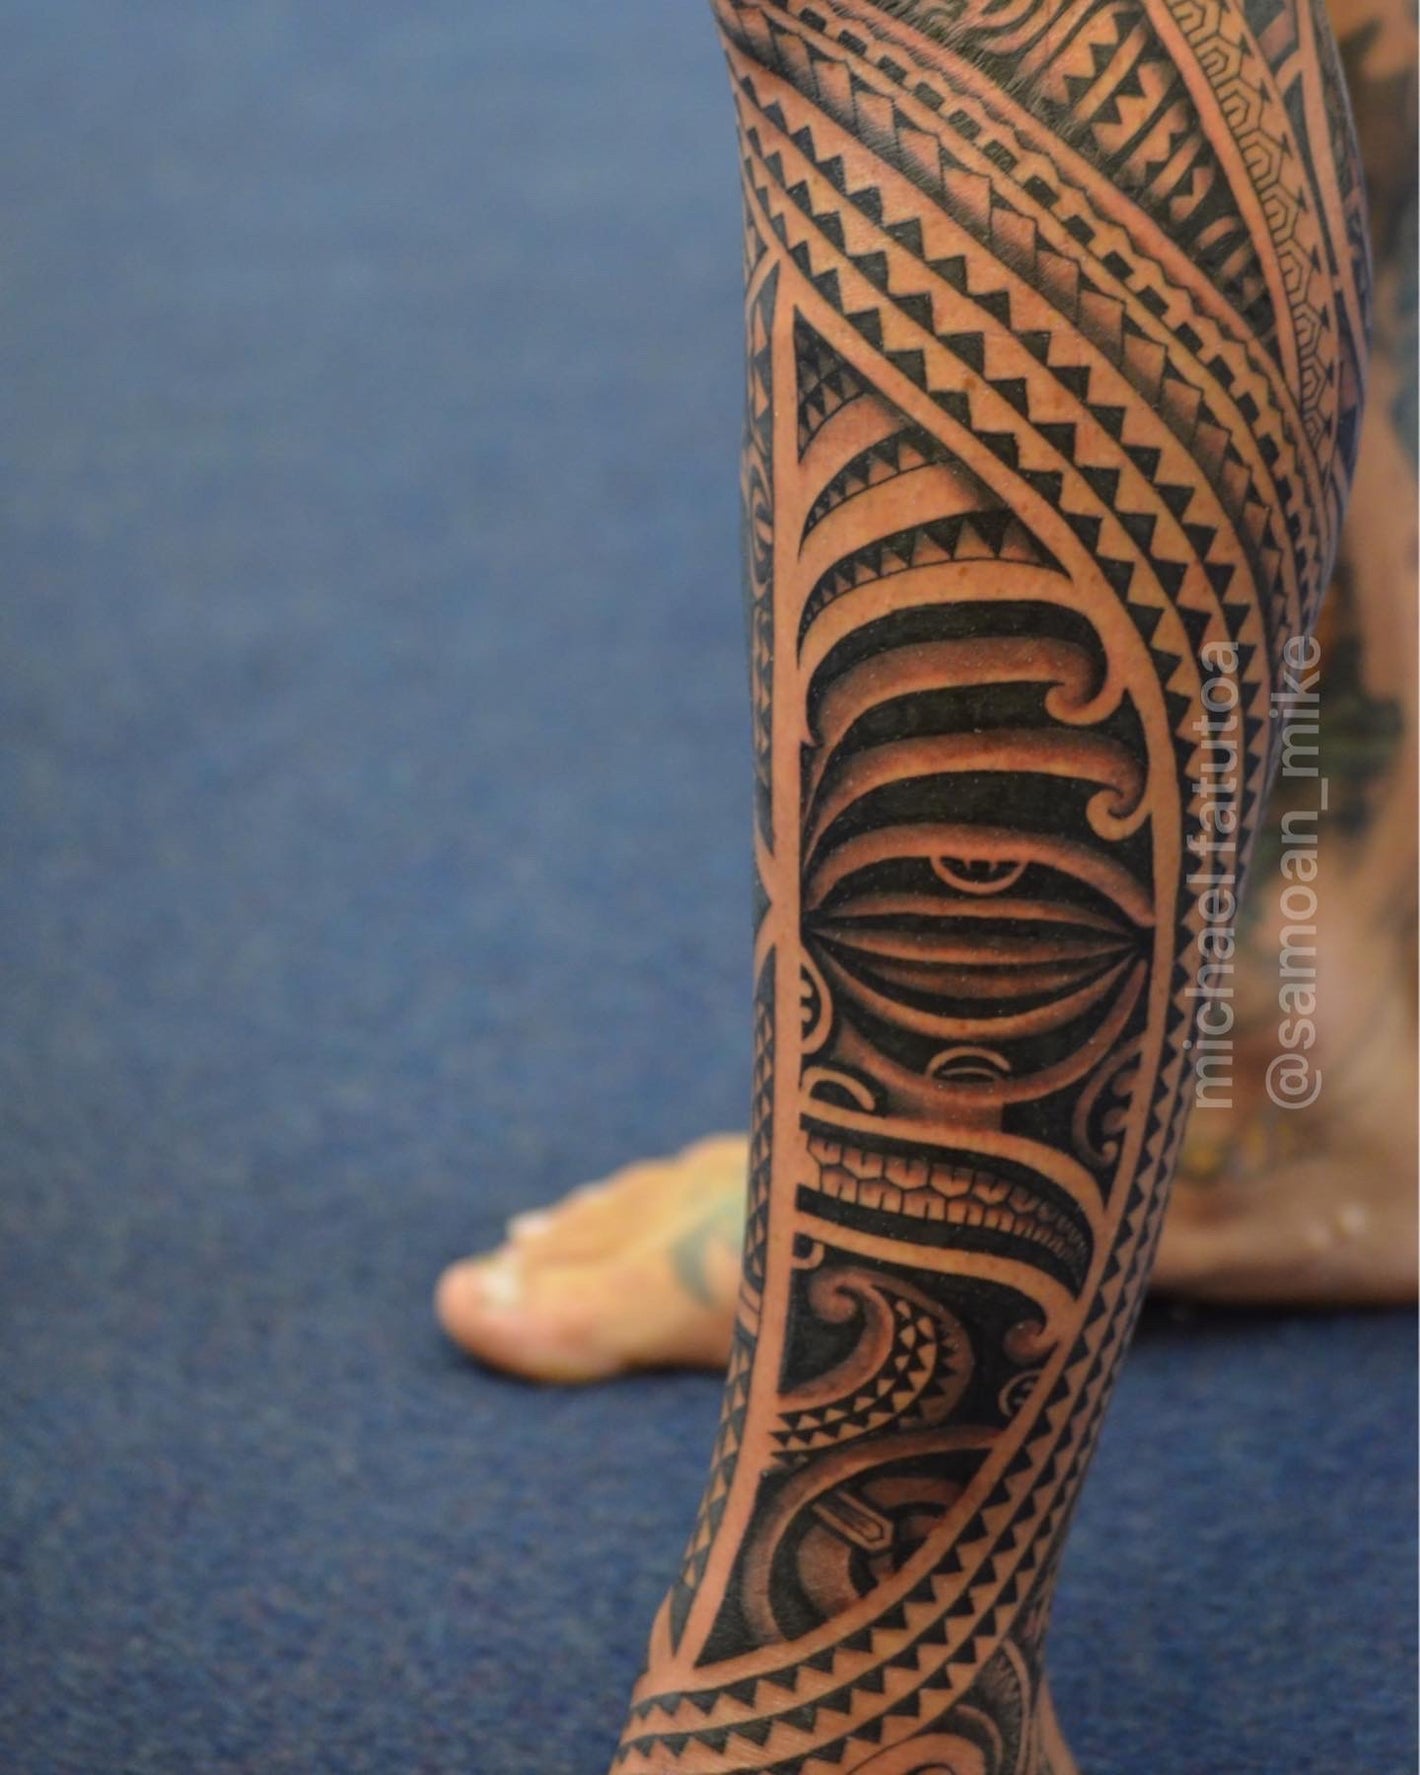 sacred tatau studio in las vegas. samoan style. polynesian tatau. vegas tatau. sacred tatau. tattoo studio las vegas. samoan art. hawaiian tattoo. tongan tattoo. tahitian tattoo. tribal tattoo. meaningful tattoos. best tatau. samoan mike. maori tattoo tat